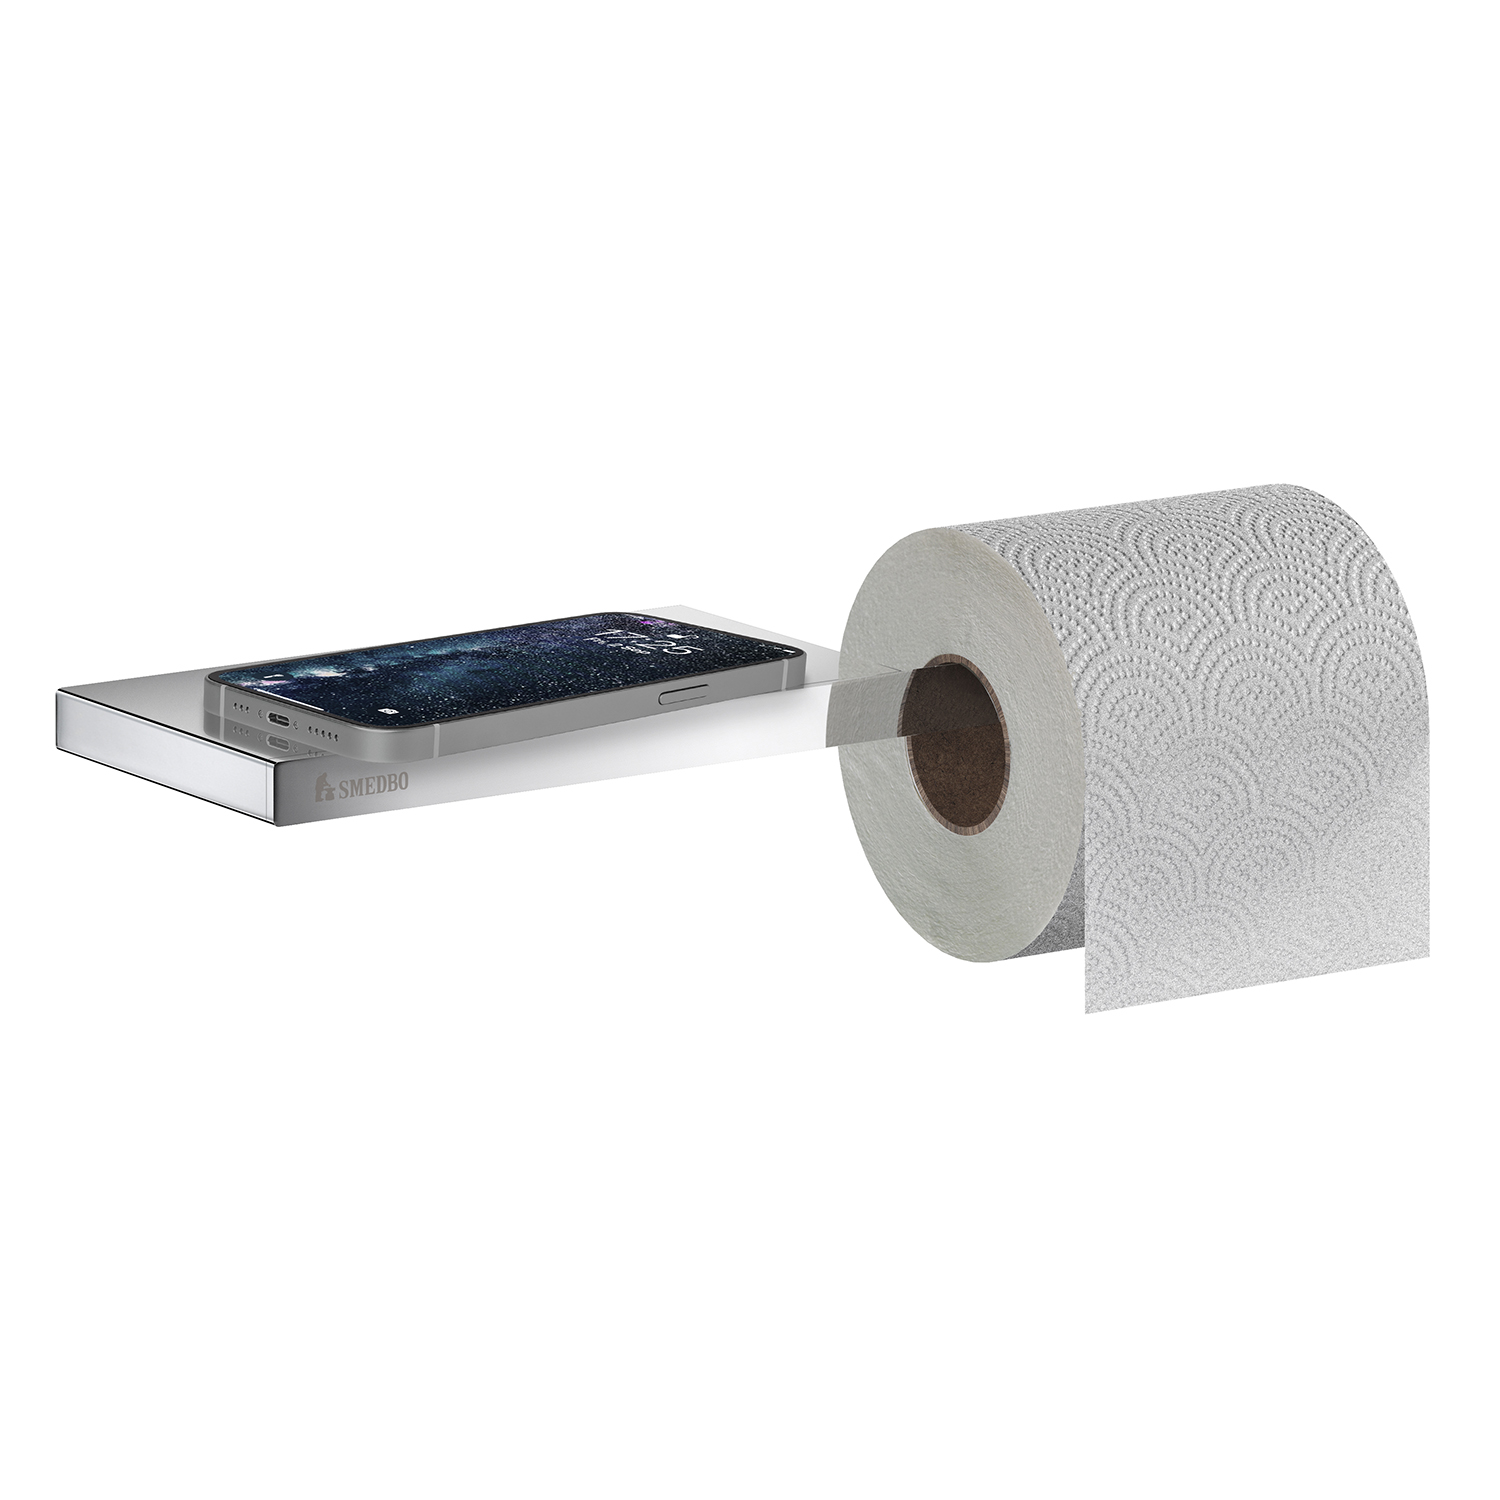 Toilet paper holder, Bathroom accessories